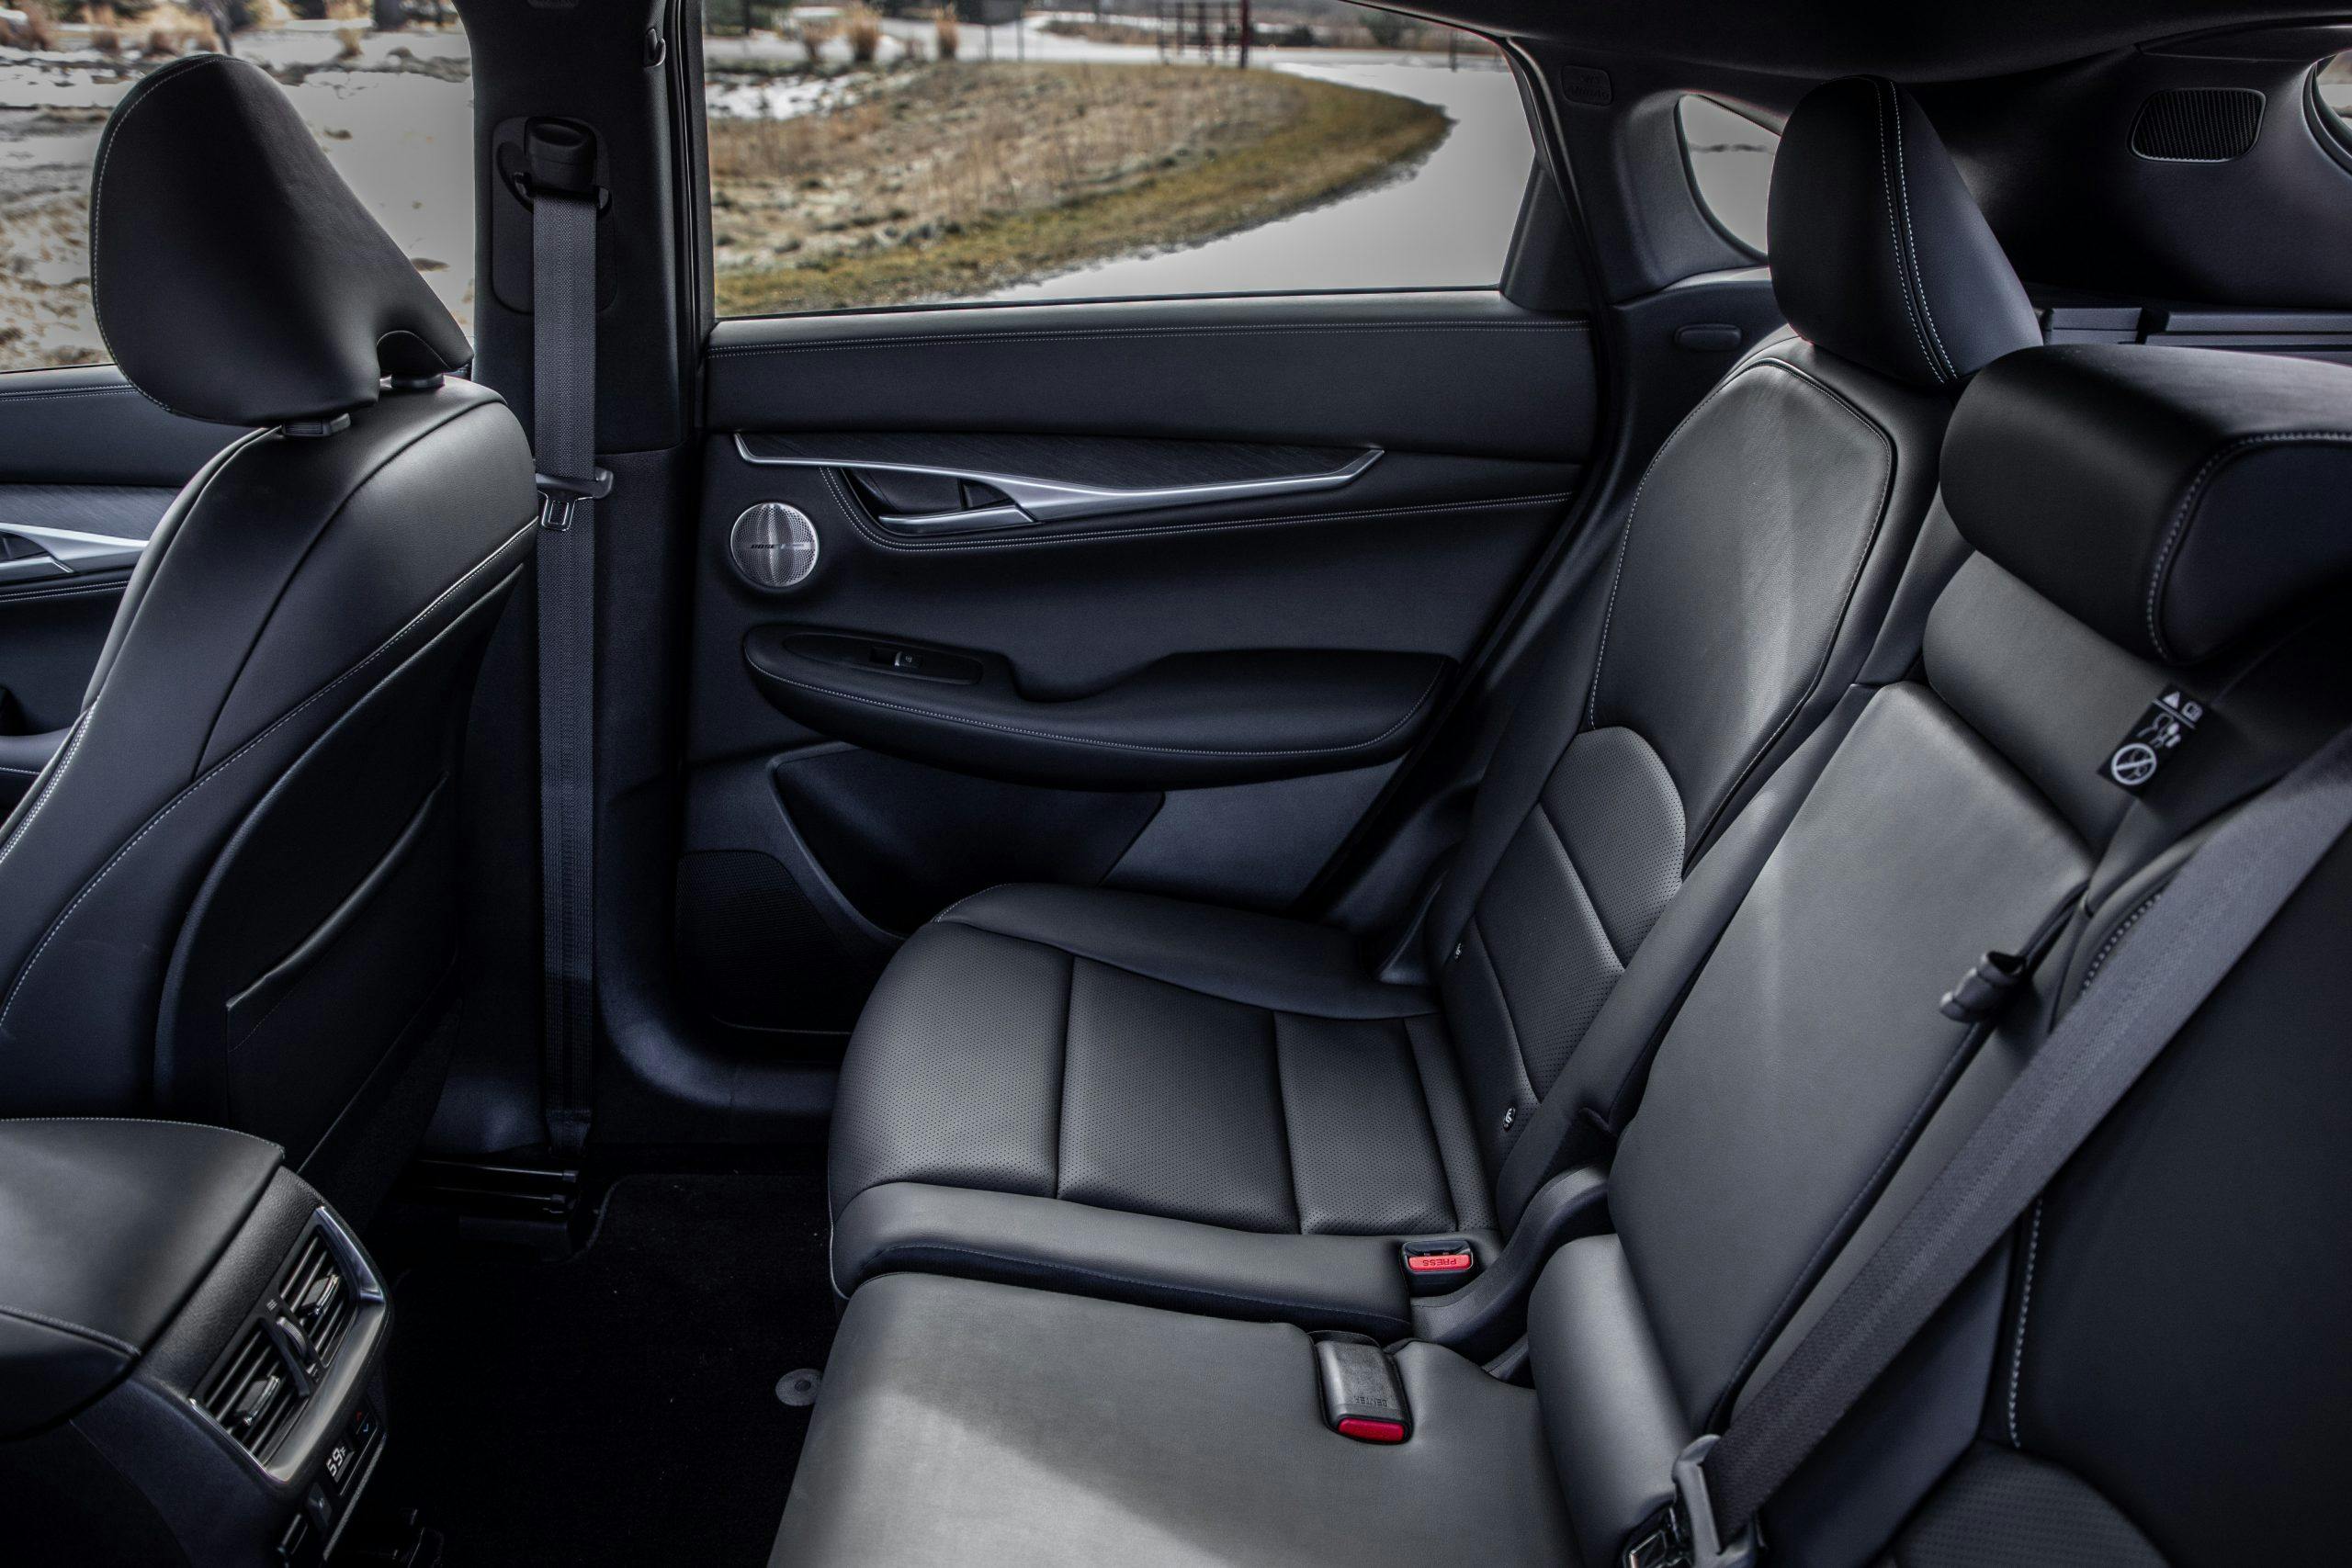 2022 Infiniti QX55 interior rear seats